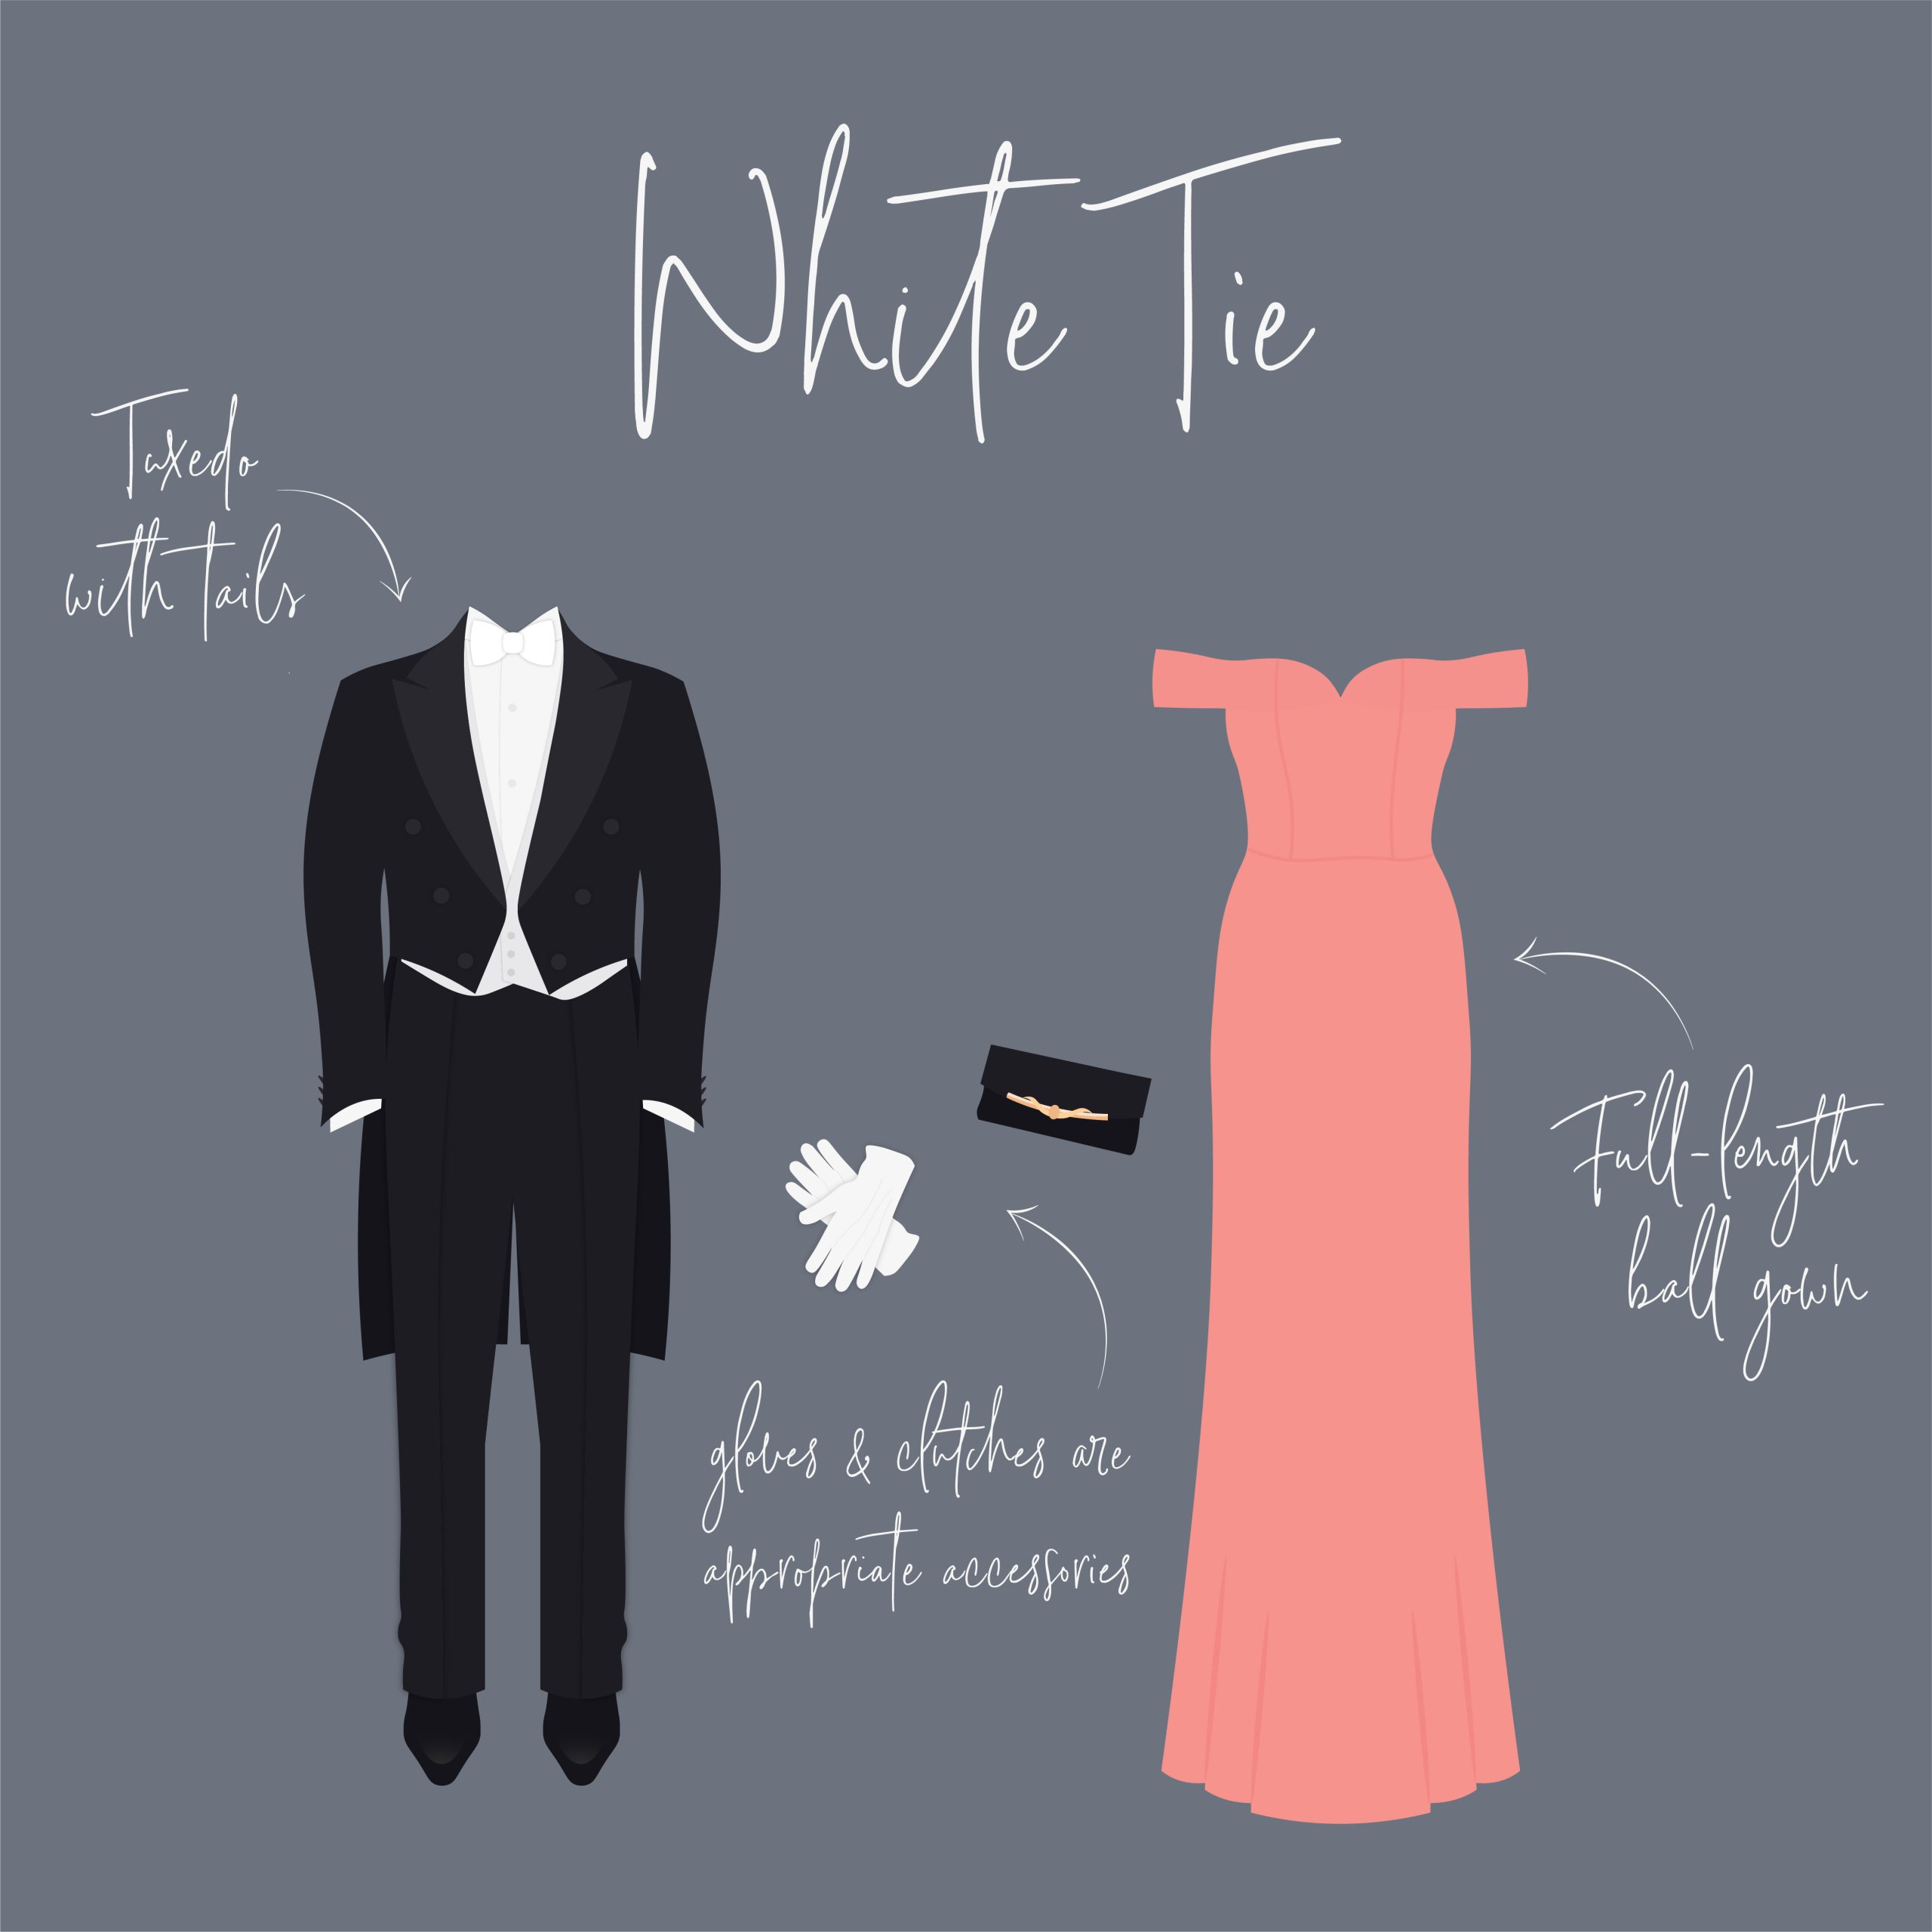 white tie wedding dress code